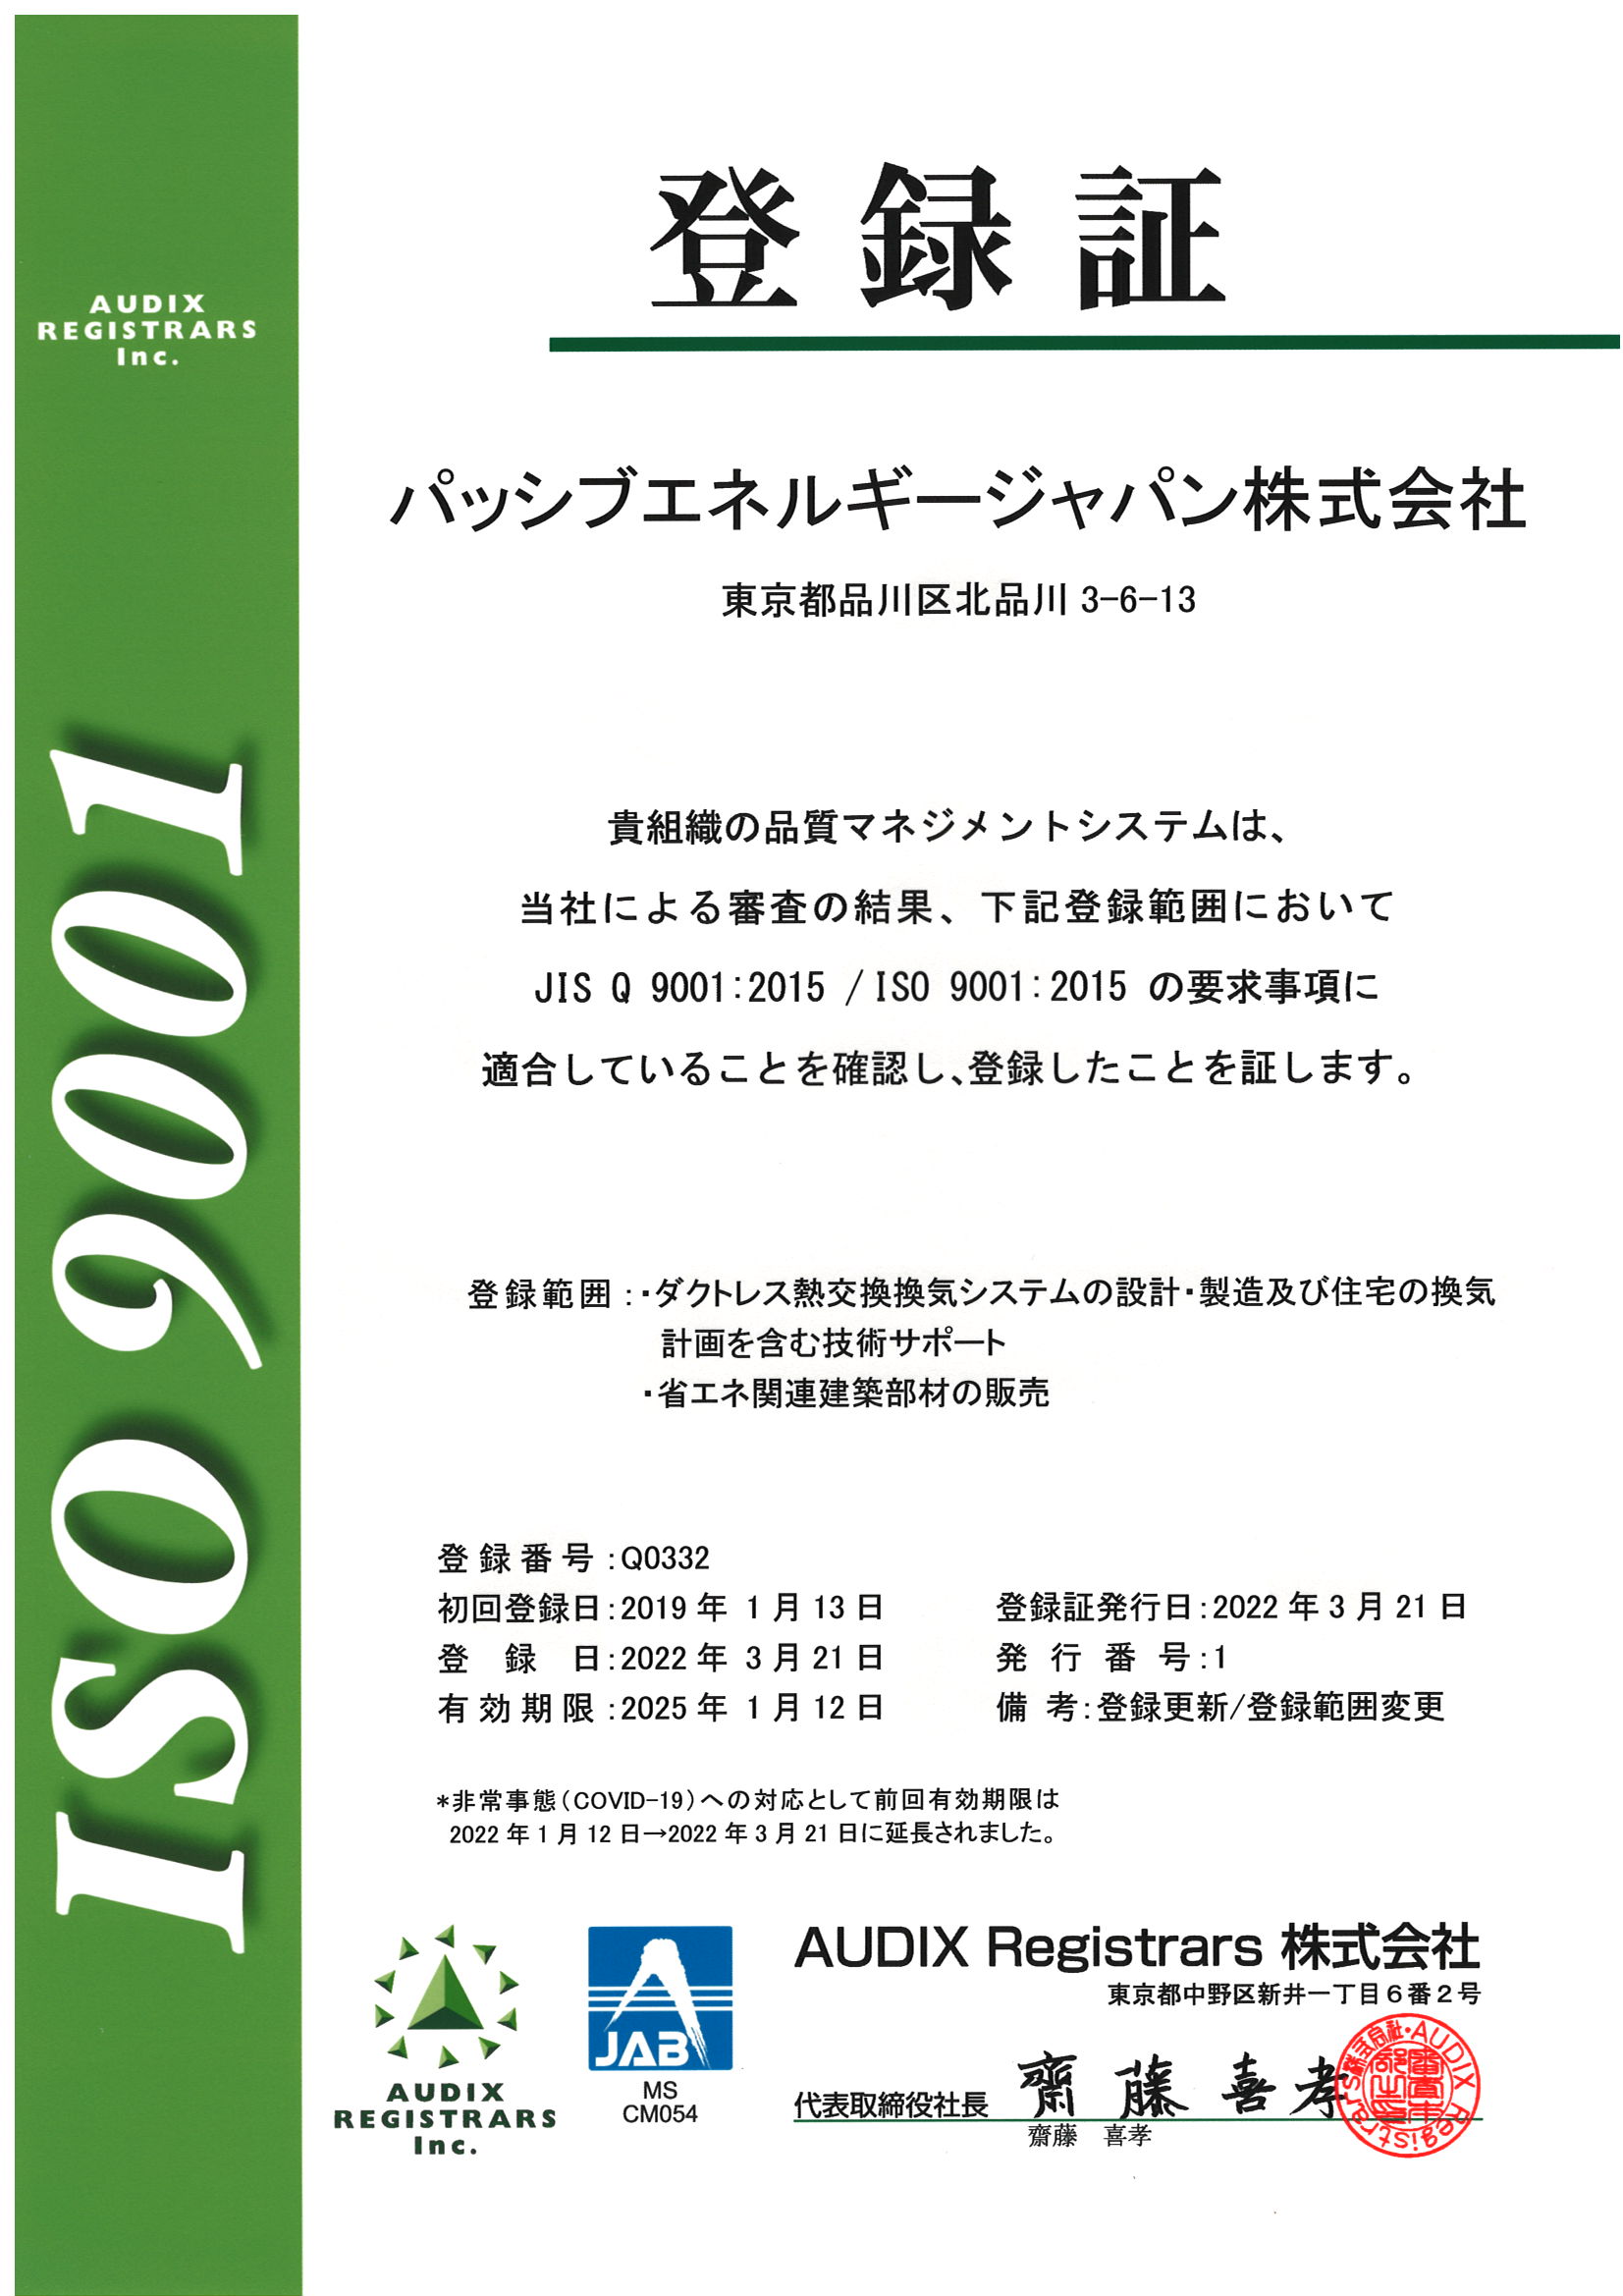 ISO9001 certificate (Japanese).